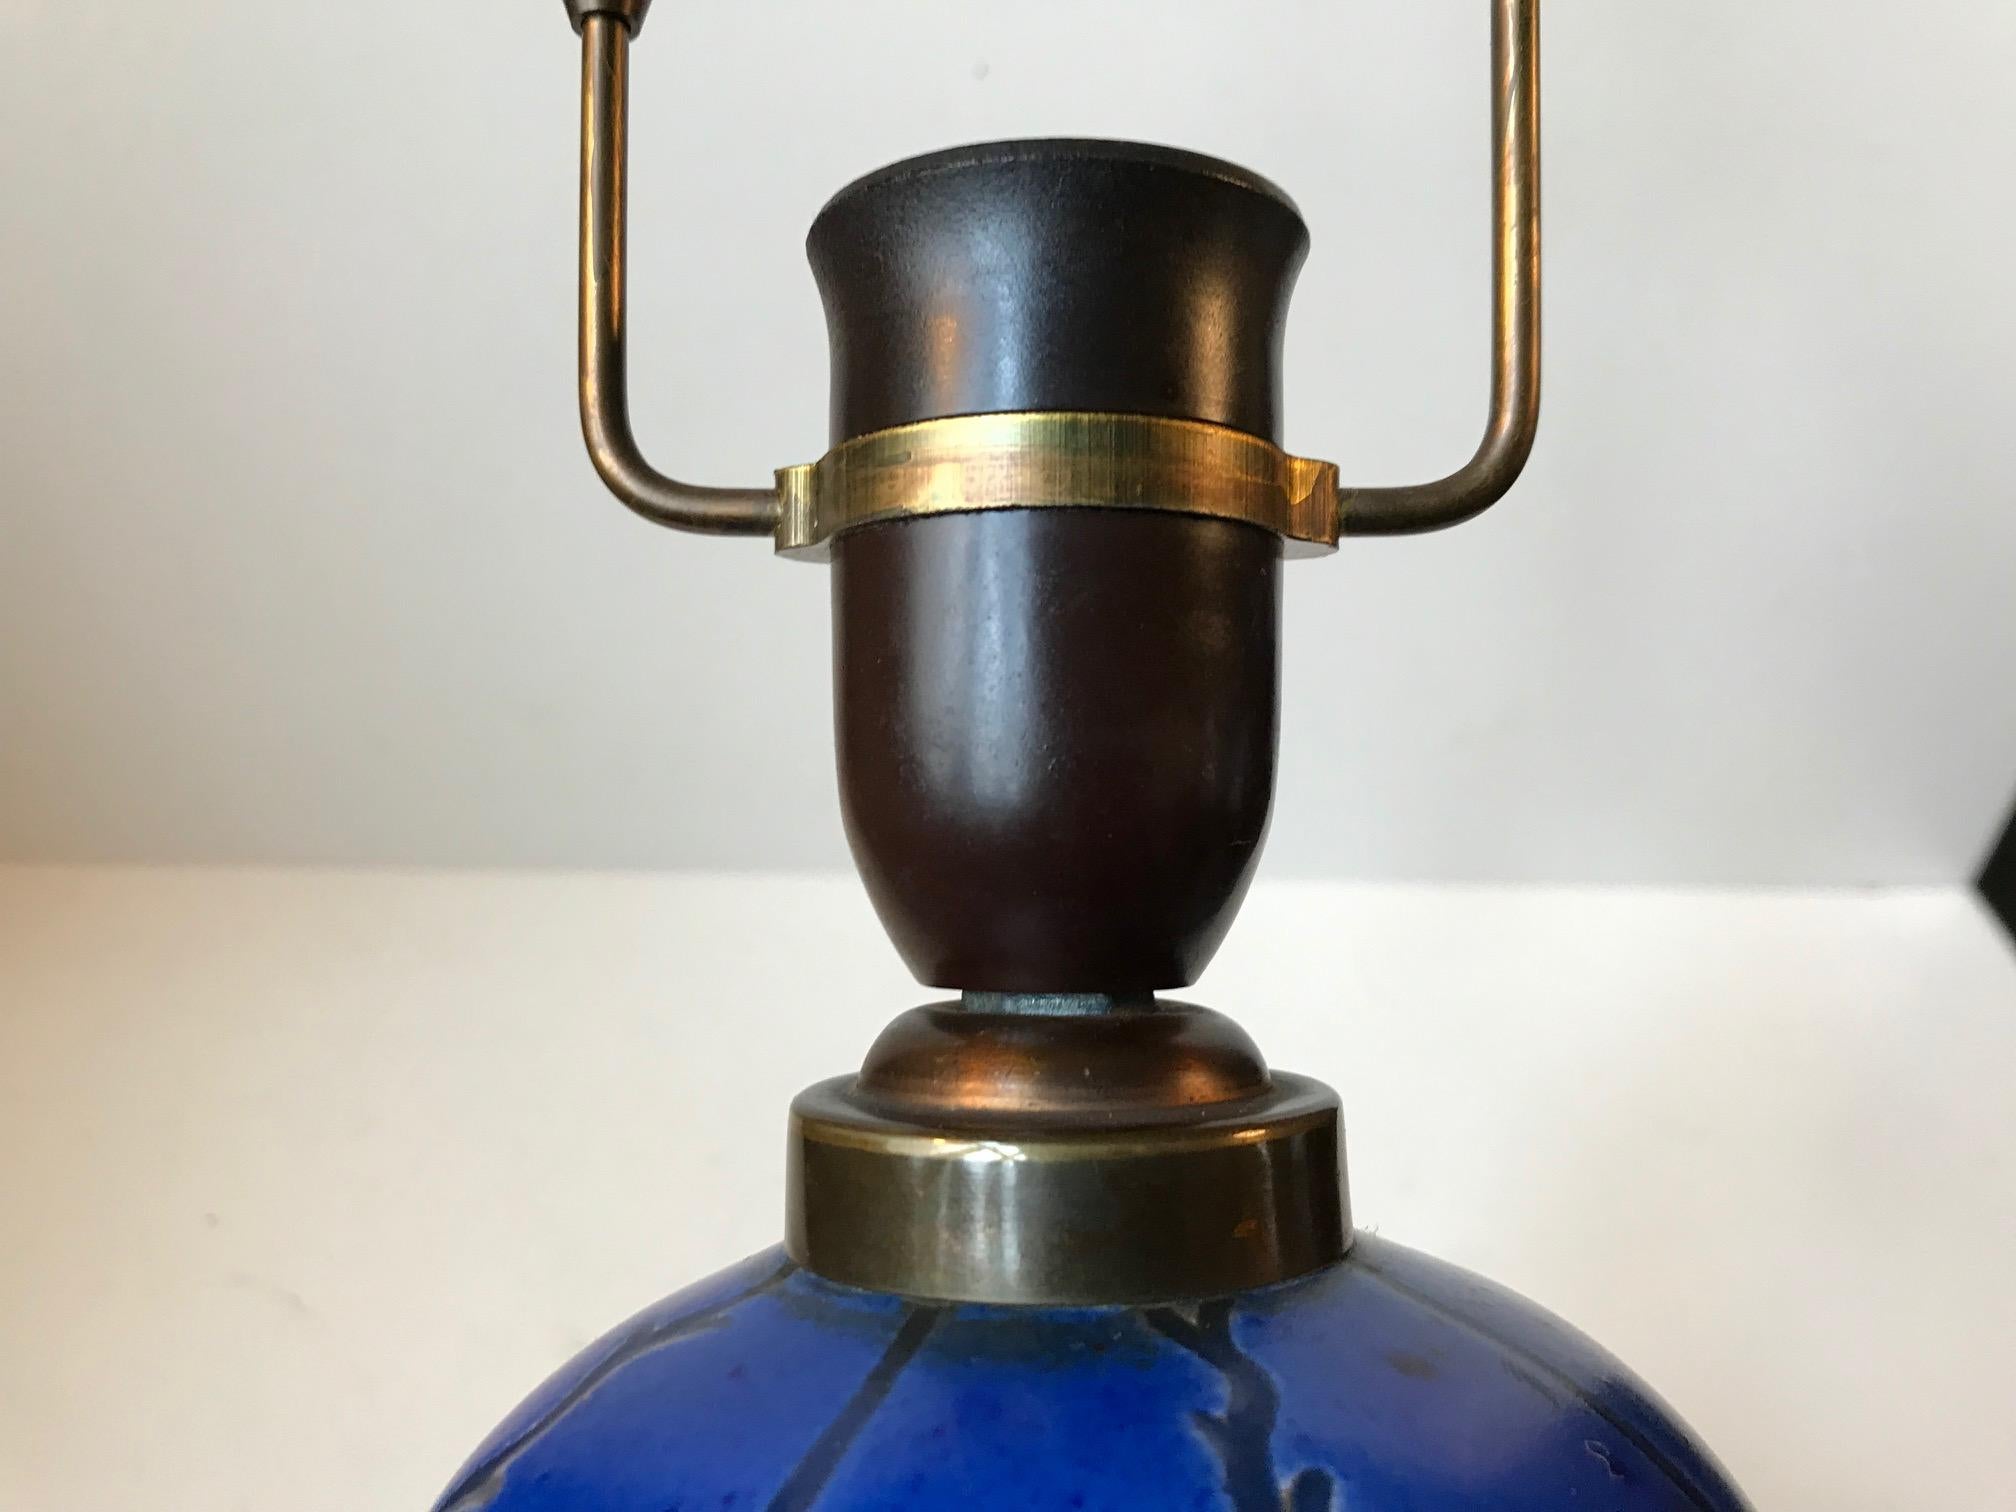 Glazed Blue Art Deco Pottery Table Lamp by Søholm, Denmark, circa 1930